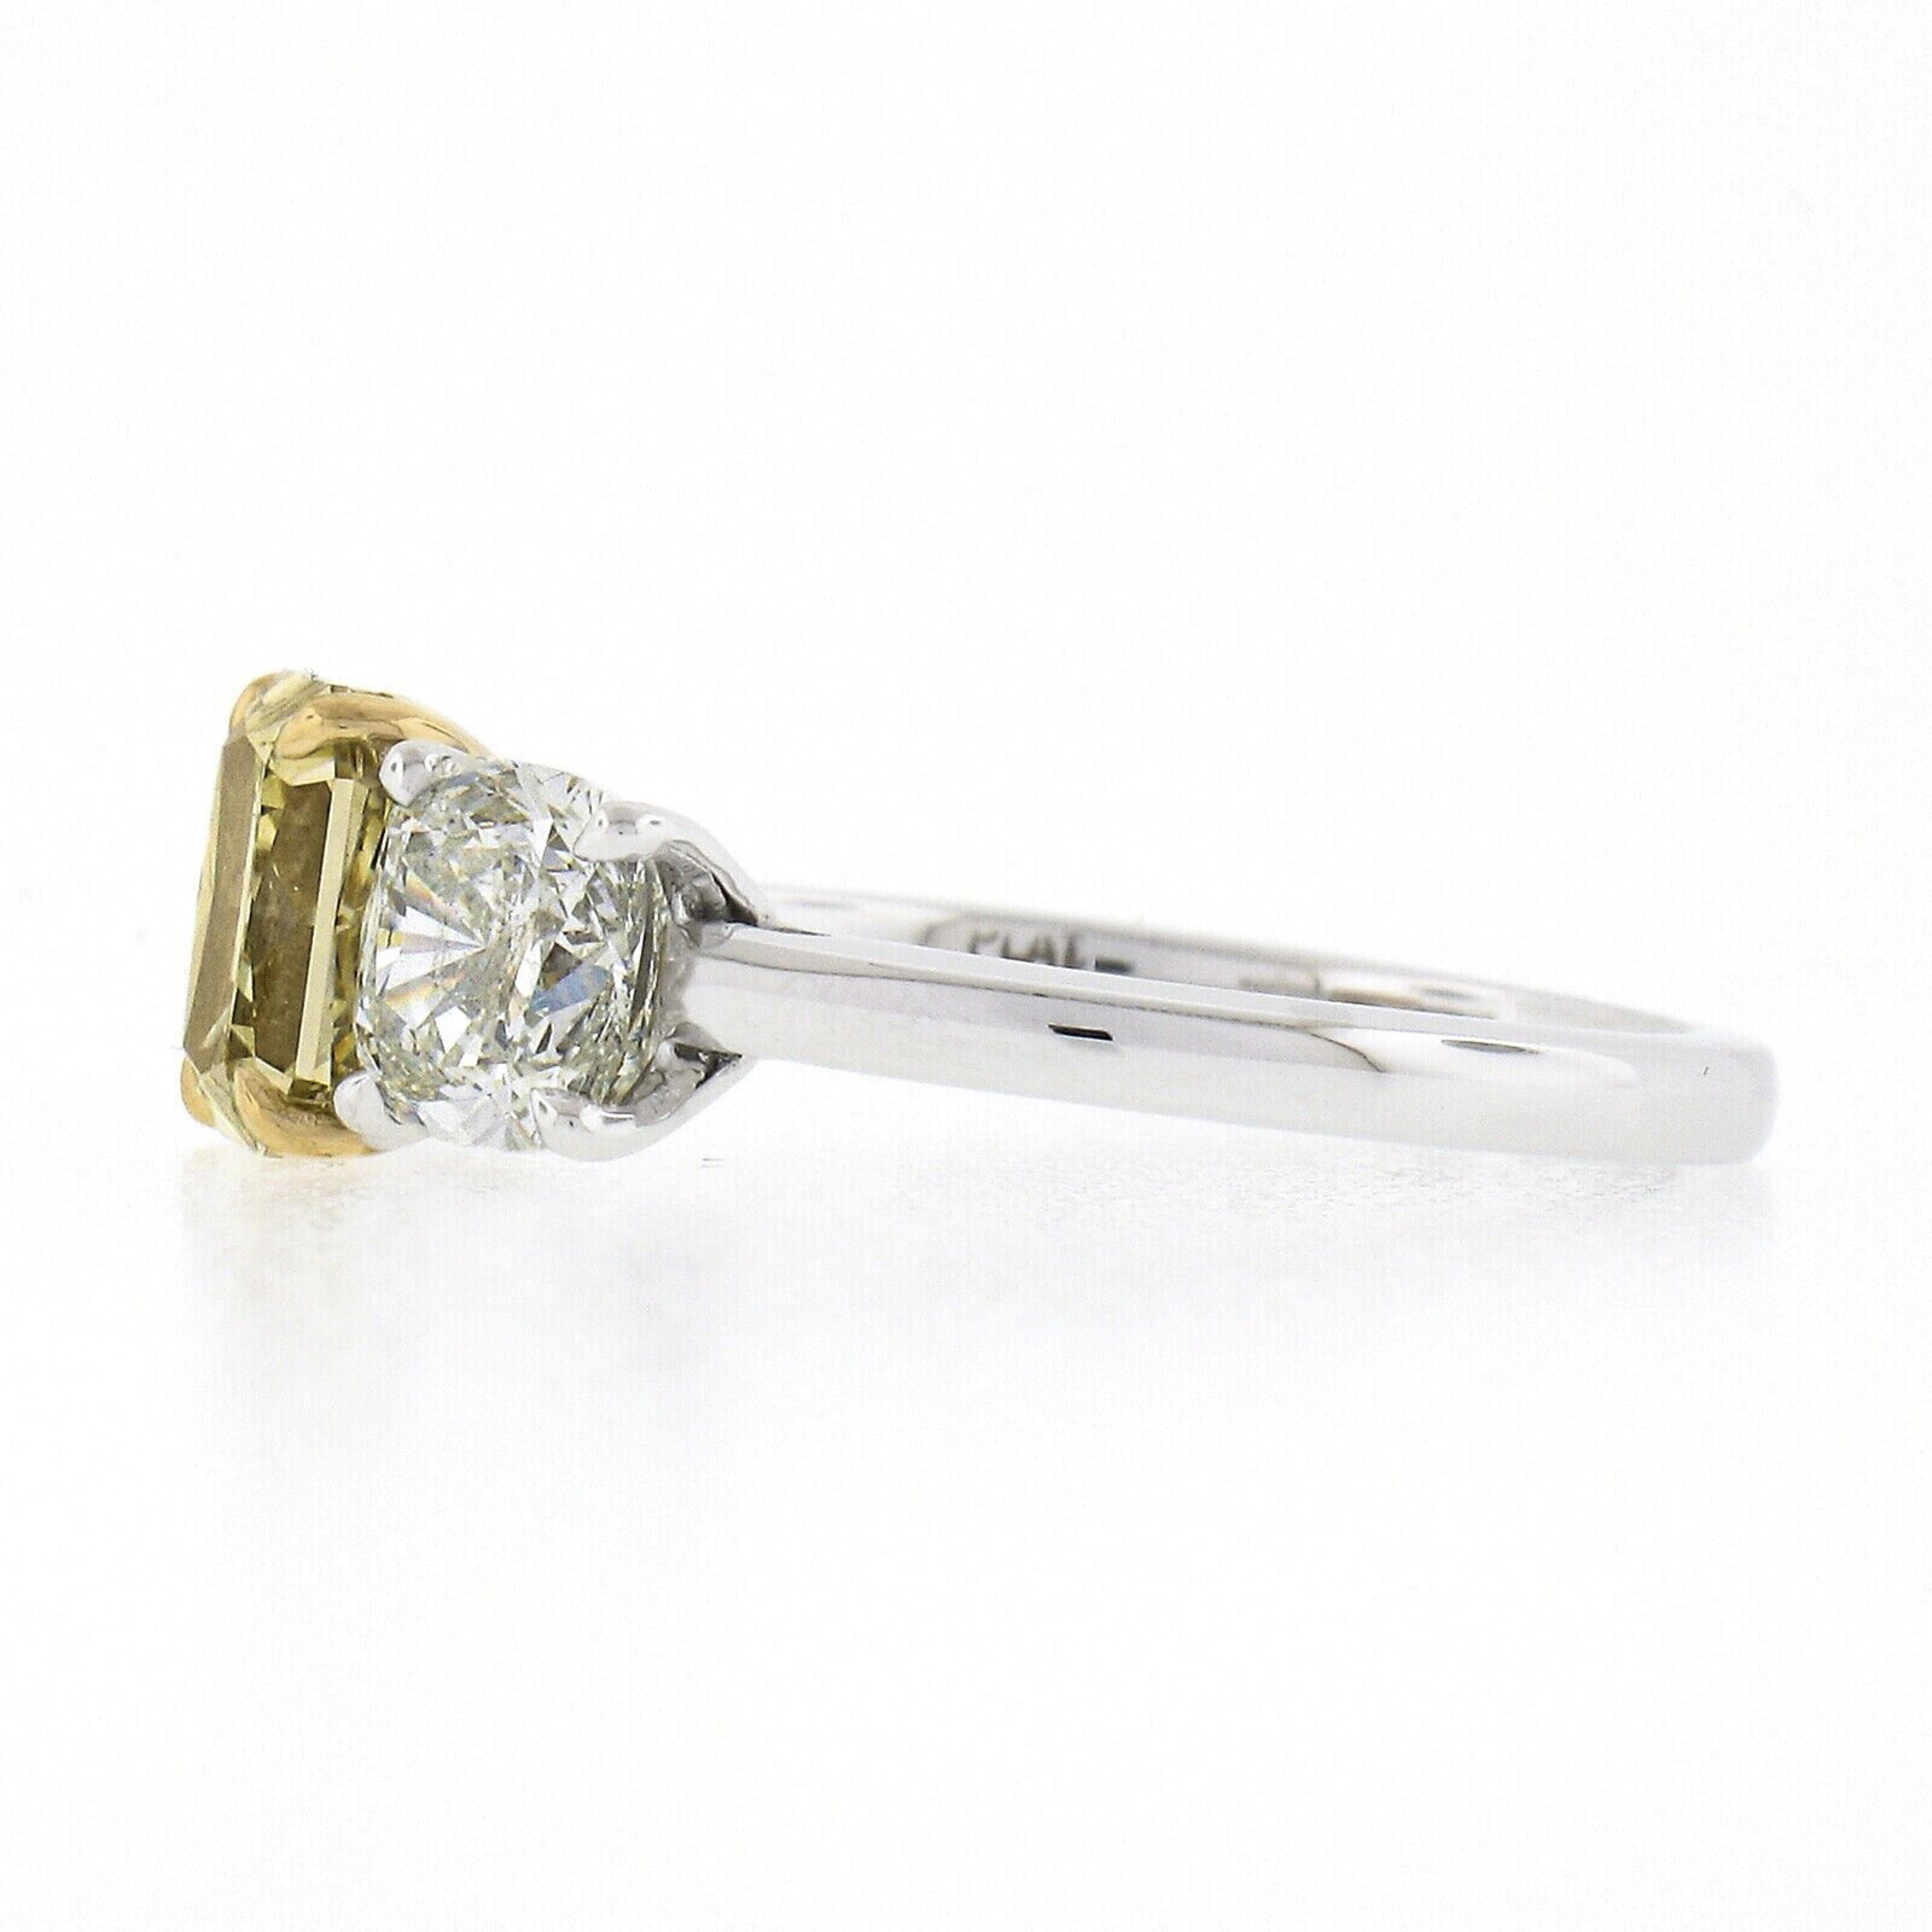 Platinum 18k Gold 3.47ct GIA Fancy Yellow & White Cushion Diamond 3 Stone Ring 1